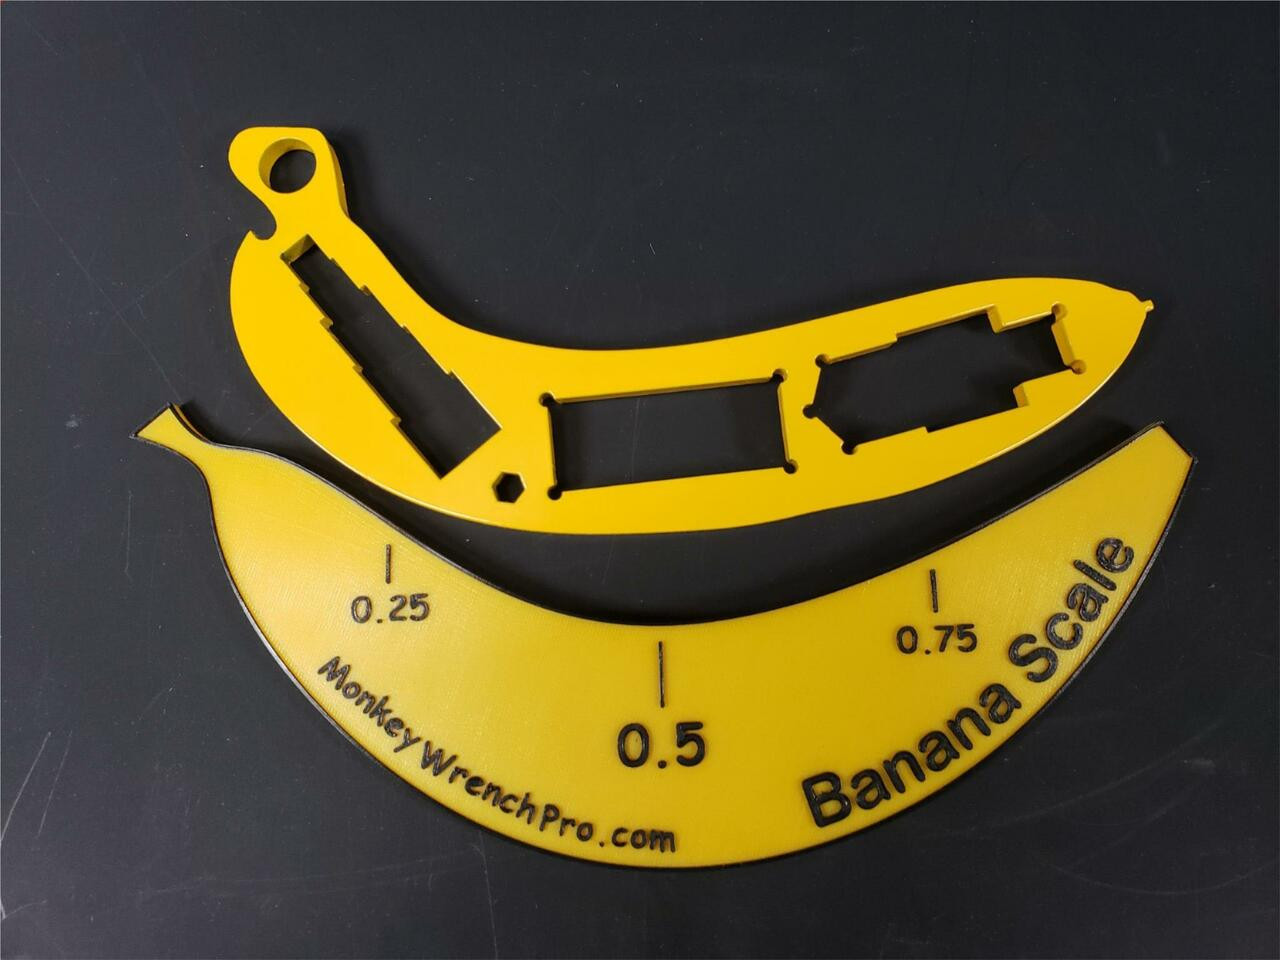 Monkey Wrench Pro Banana Wrench Full Size - Monkey Wrench